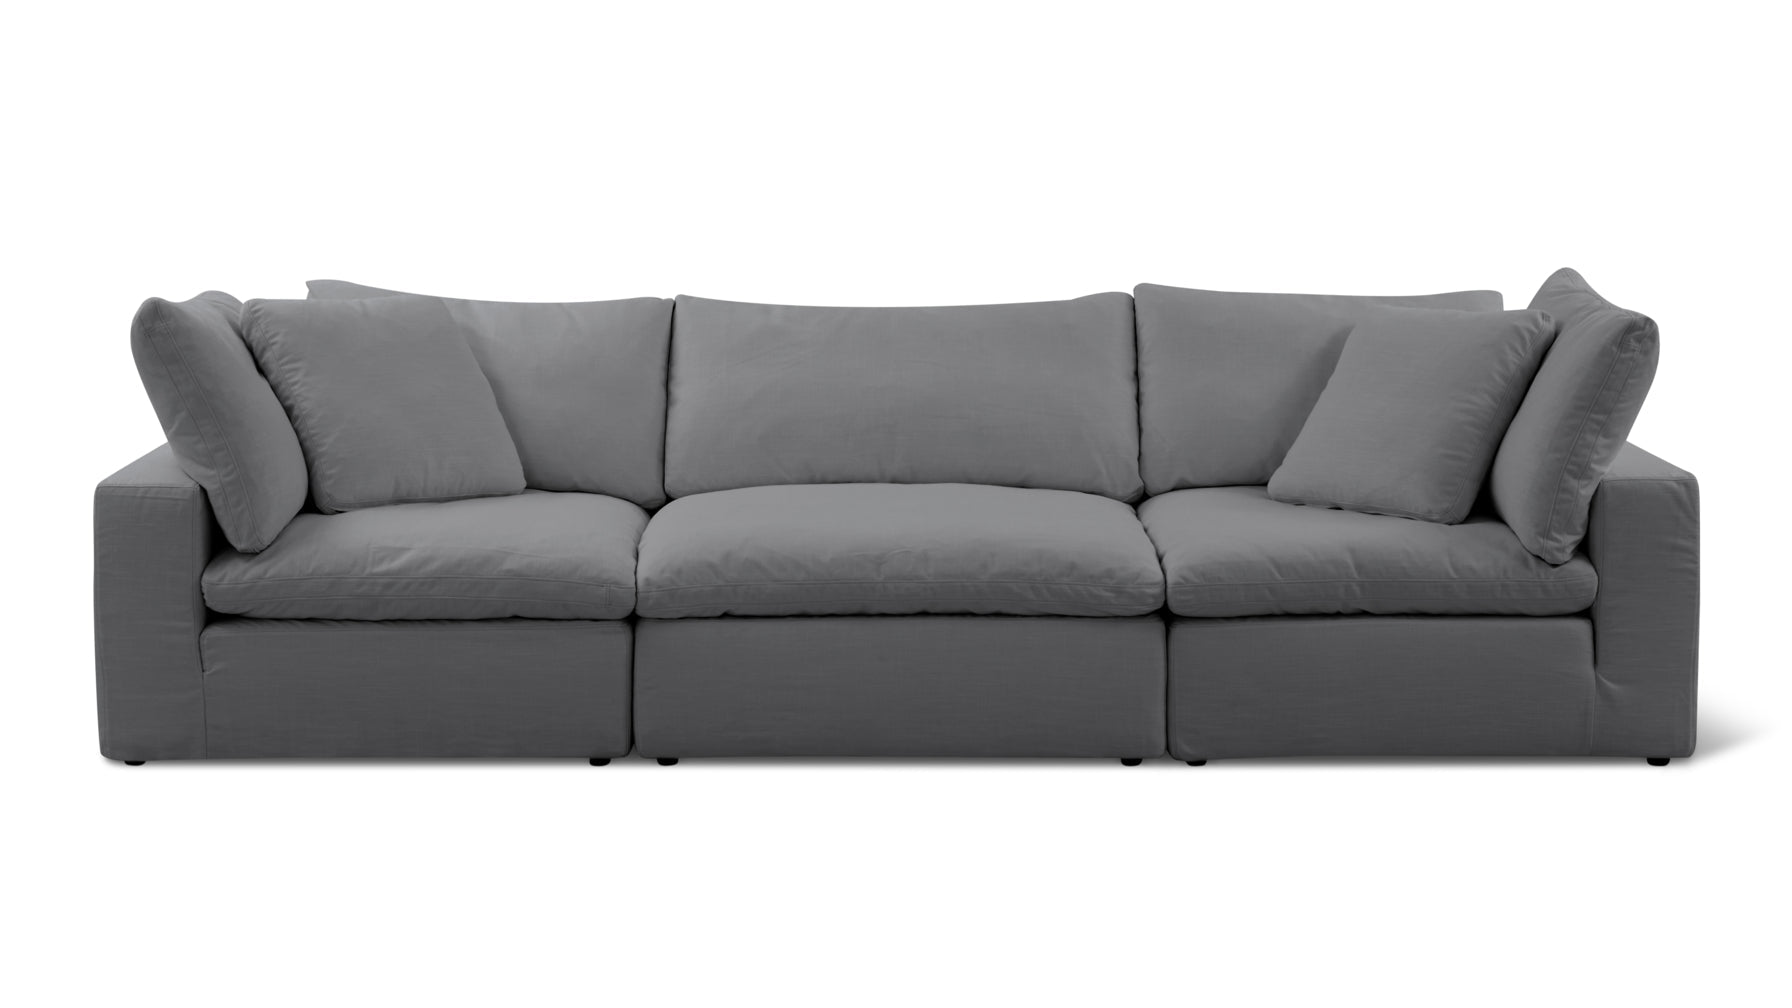 Movie Night™ 3-Piece Modular Sofa, Large, Gentle Rain - Image 1